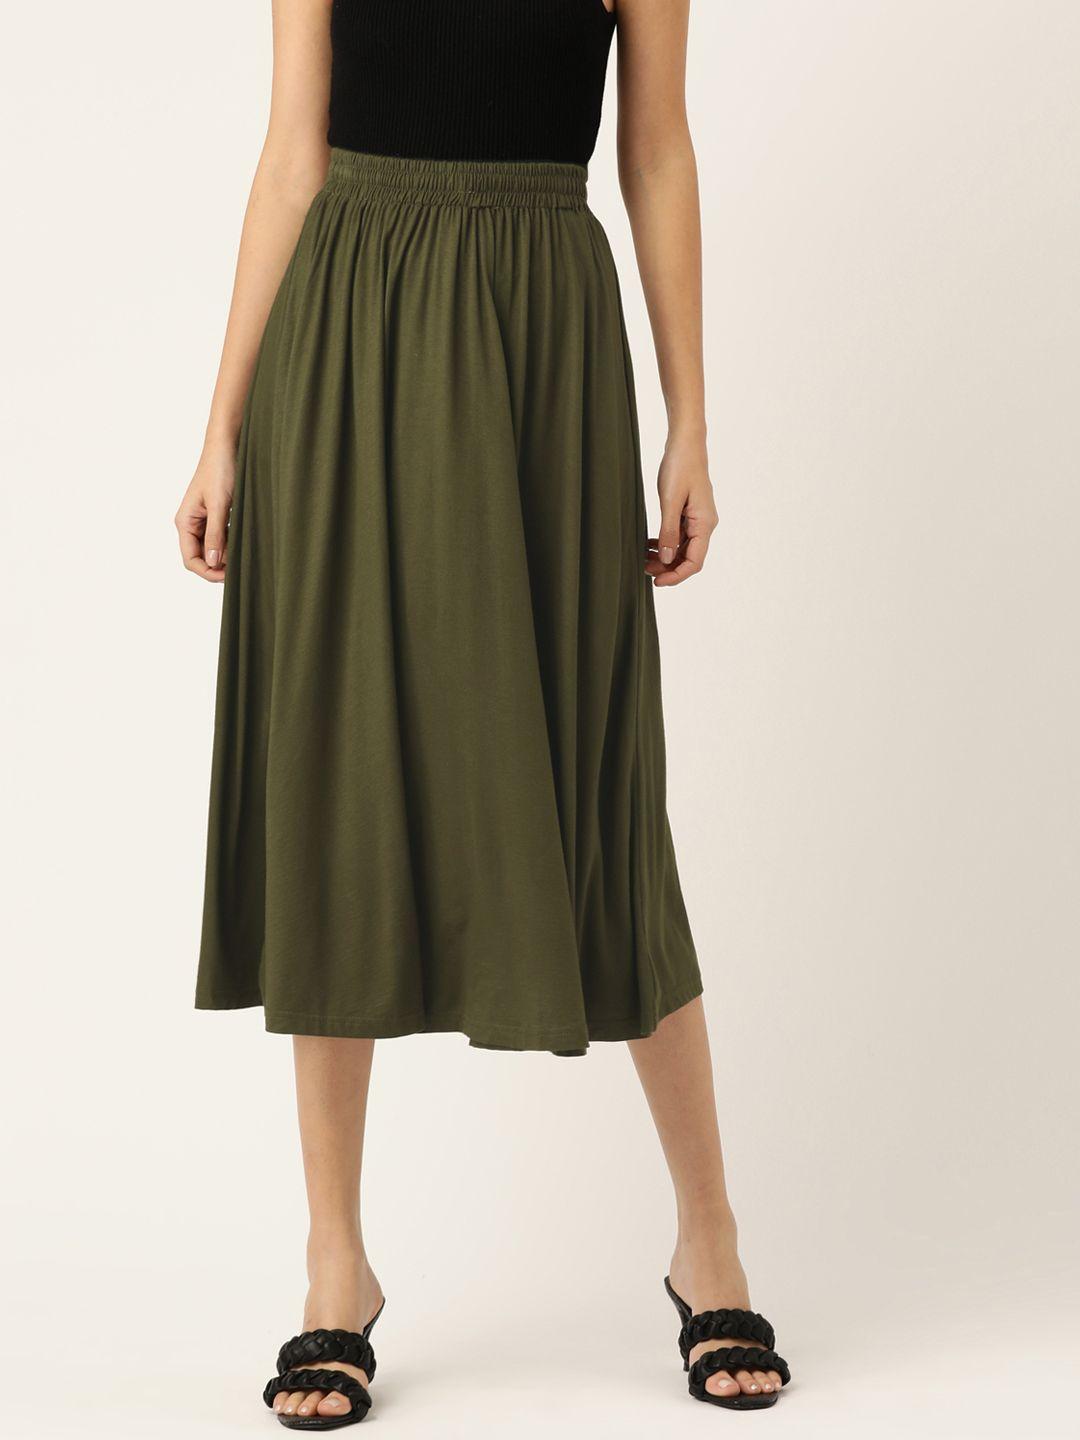 brinns women olive green solid a-line skirt